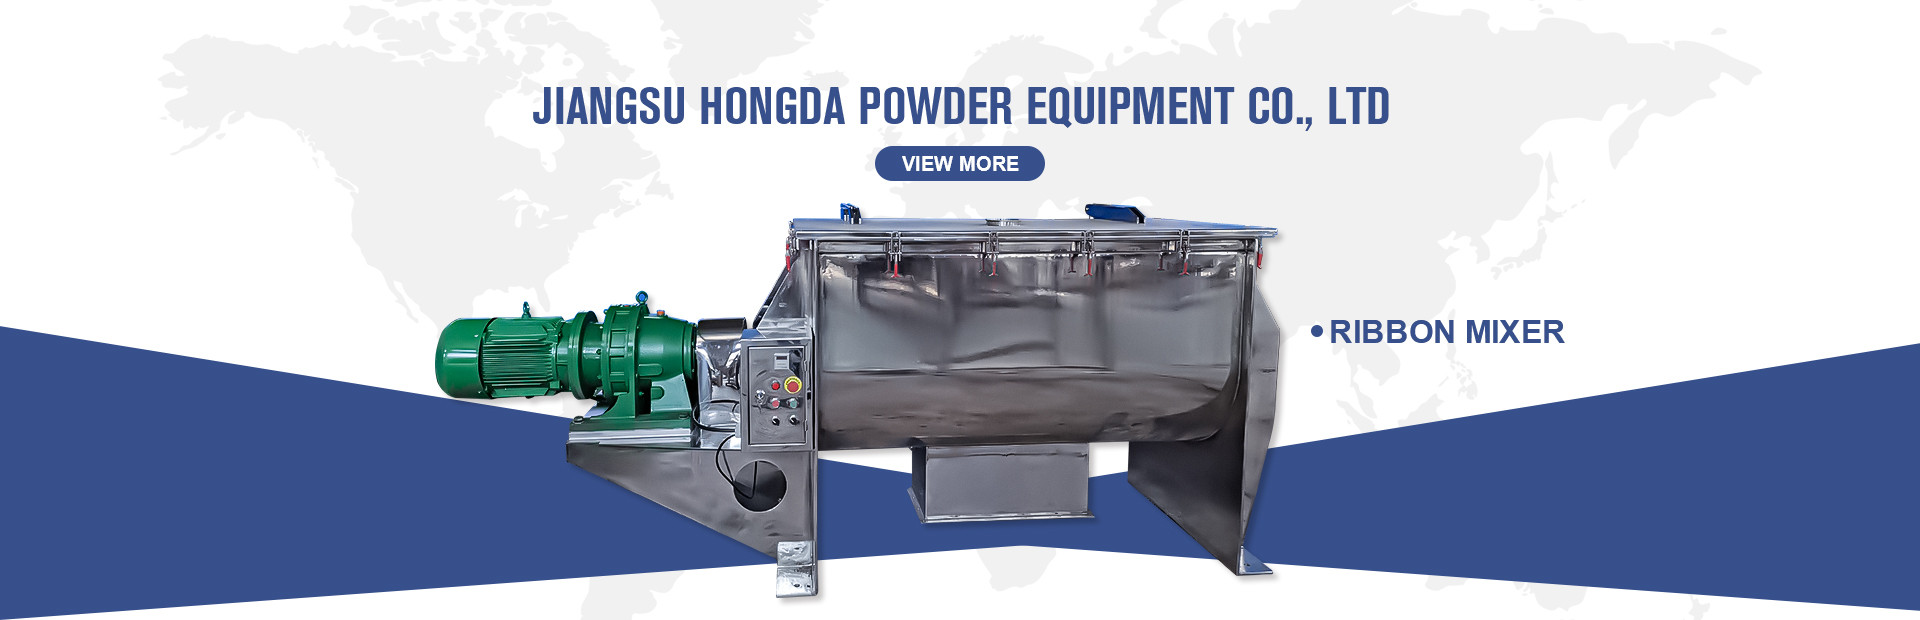 Jiangsu Hongda Powder Equipment Co., Ltd